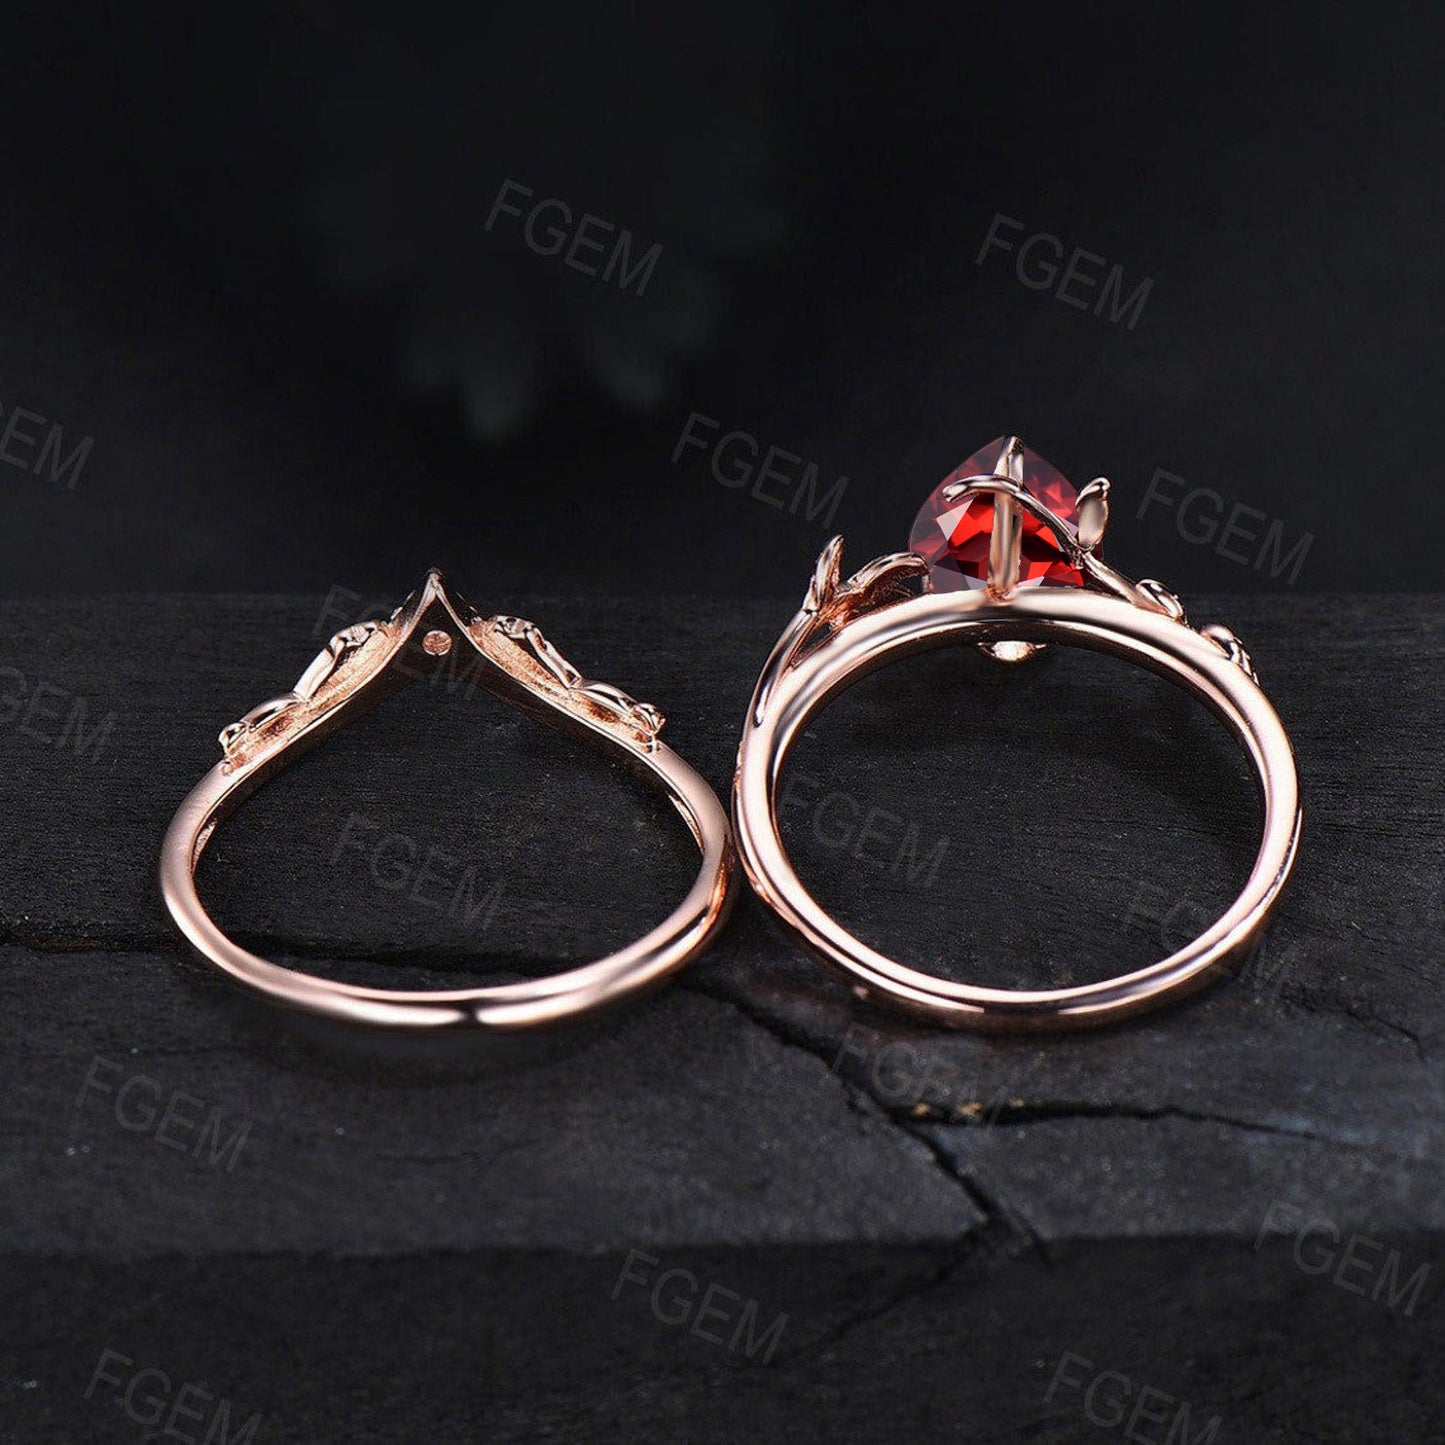 Natural Garnet and Black Diamond Bridal Rings 1.25ct Pear Shaped Red Garnet Engagement Rings Vintage Antique Art Deco Black Spinel Nature Wedding Ring Set